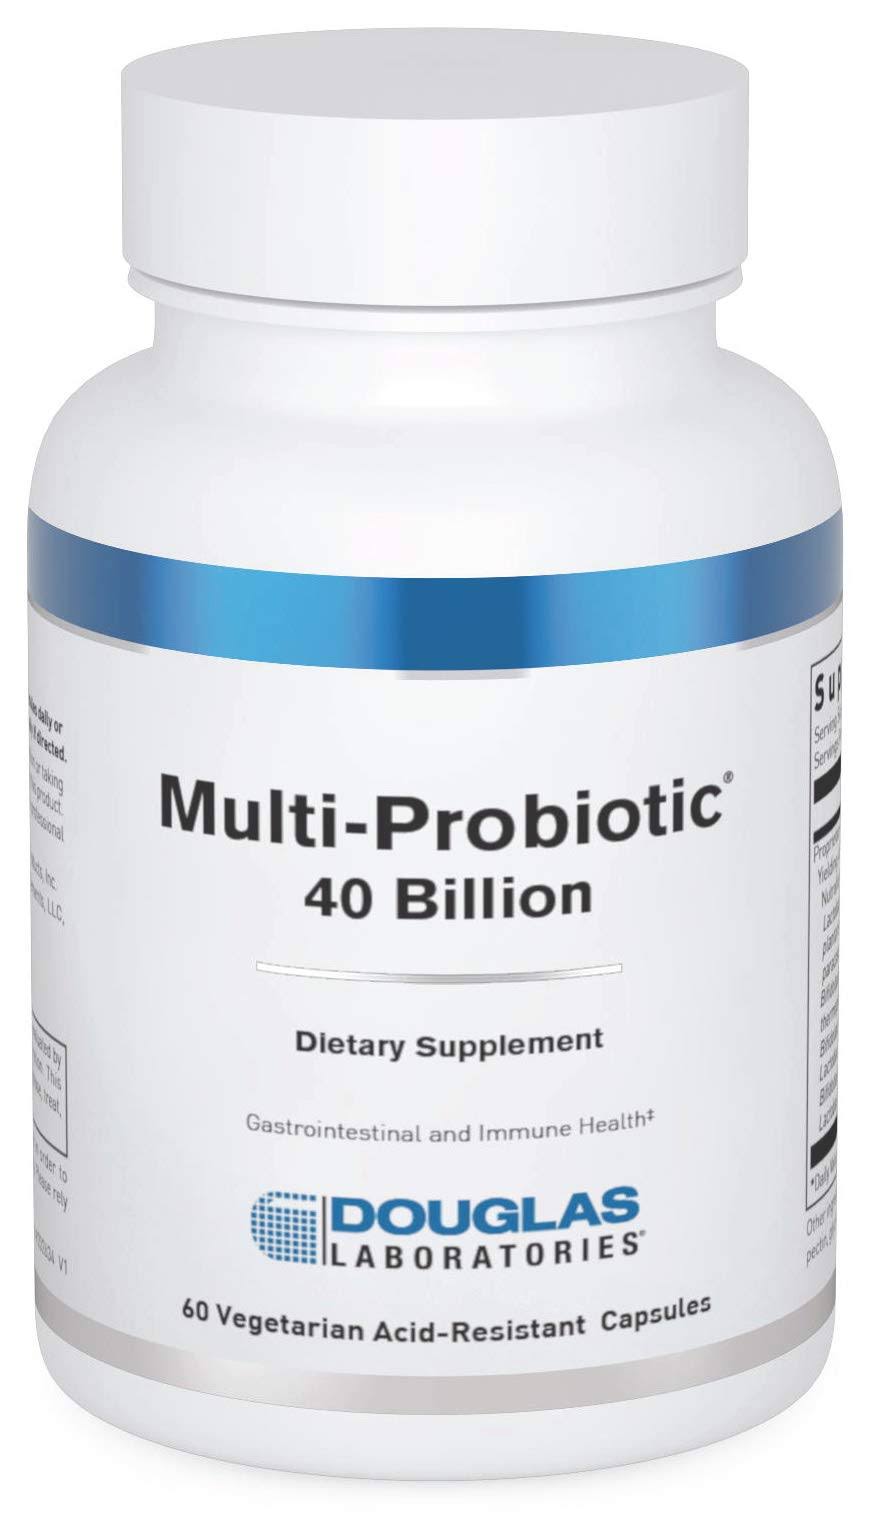 Douglas Laboratories - Multi-Probiotic 40 Billion - 60 Vegetarian